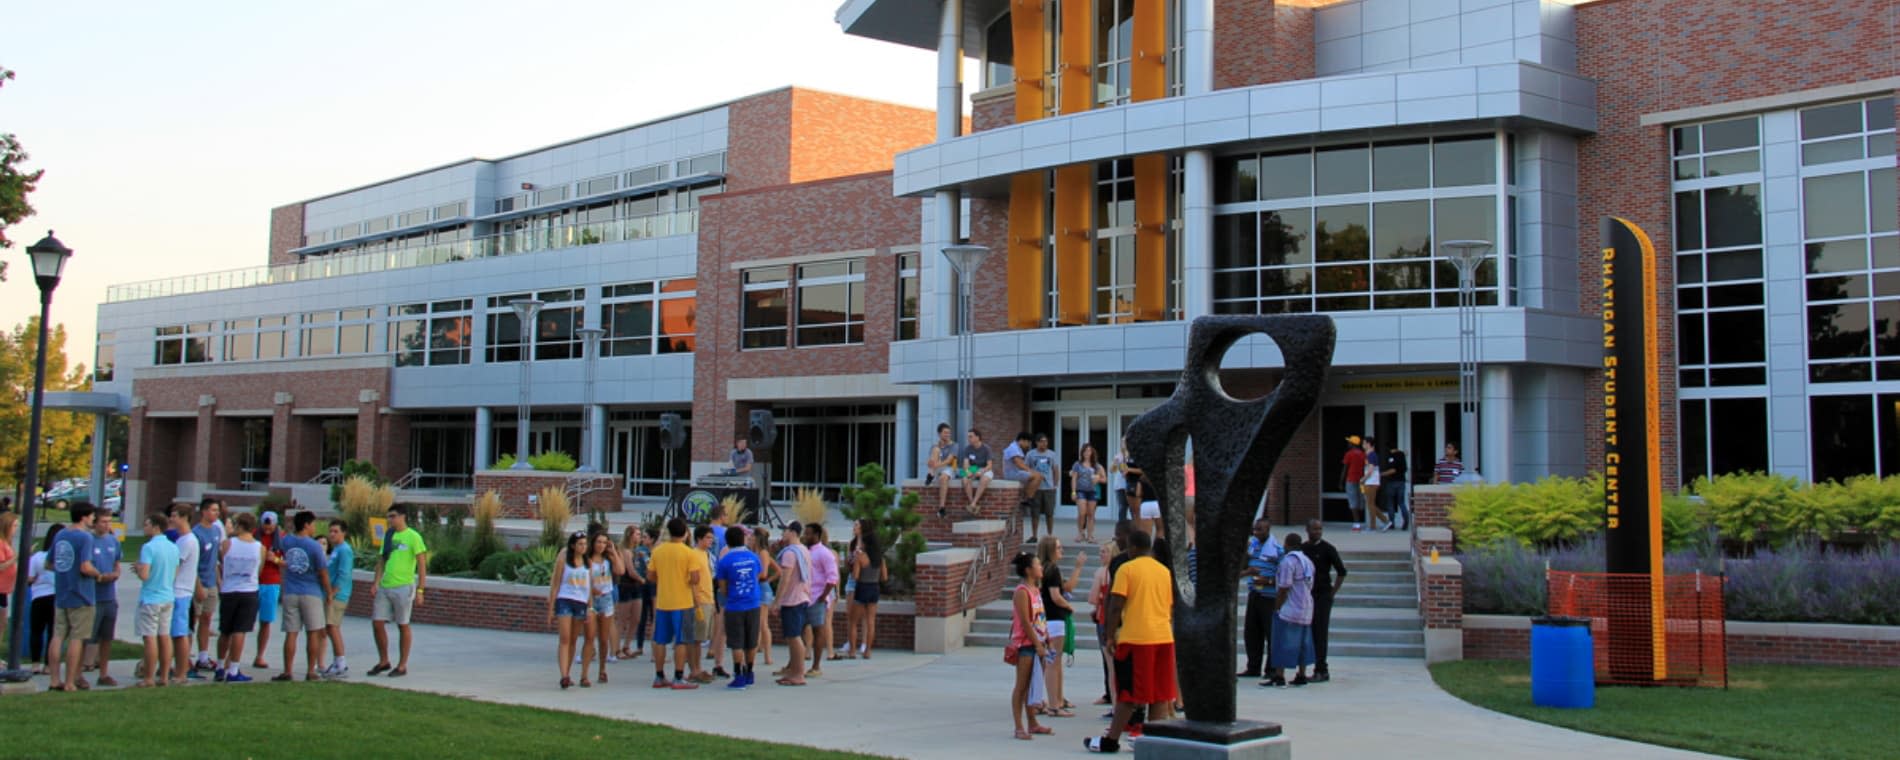 Rhatigan Student Center at Wichita State University